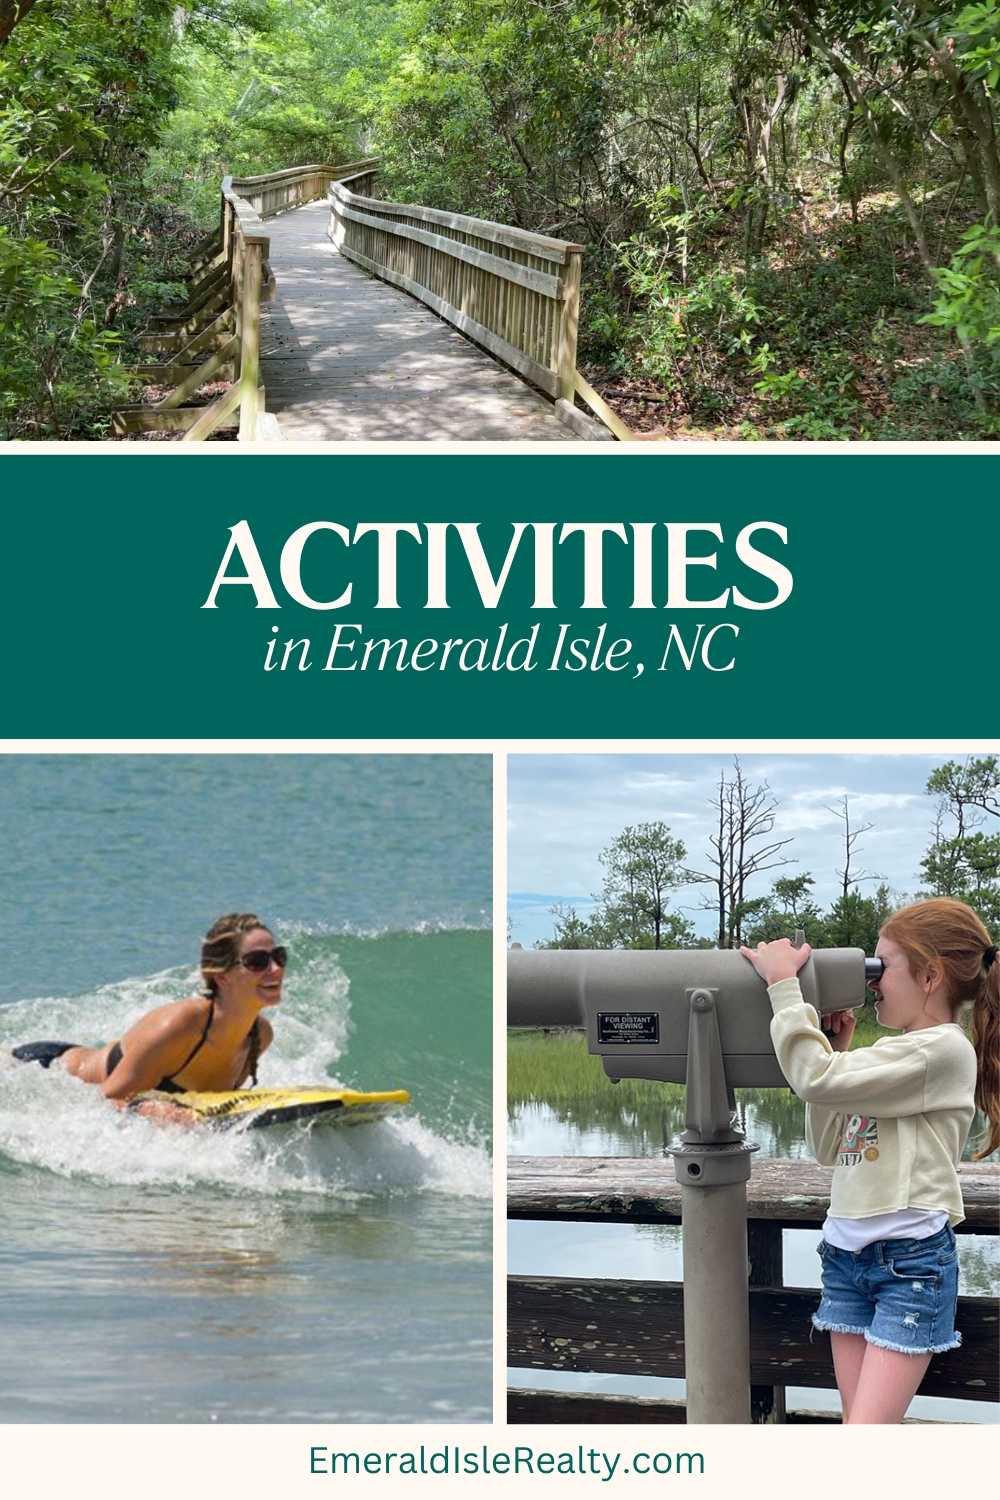 Activities in Emerald Isle, NC